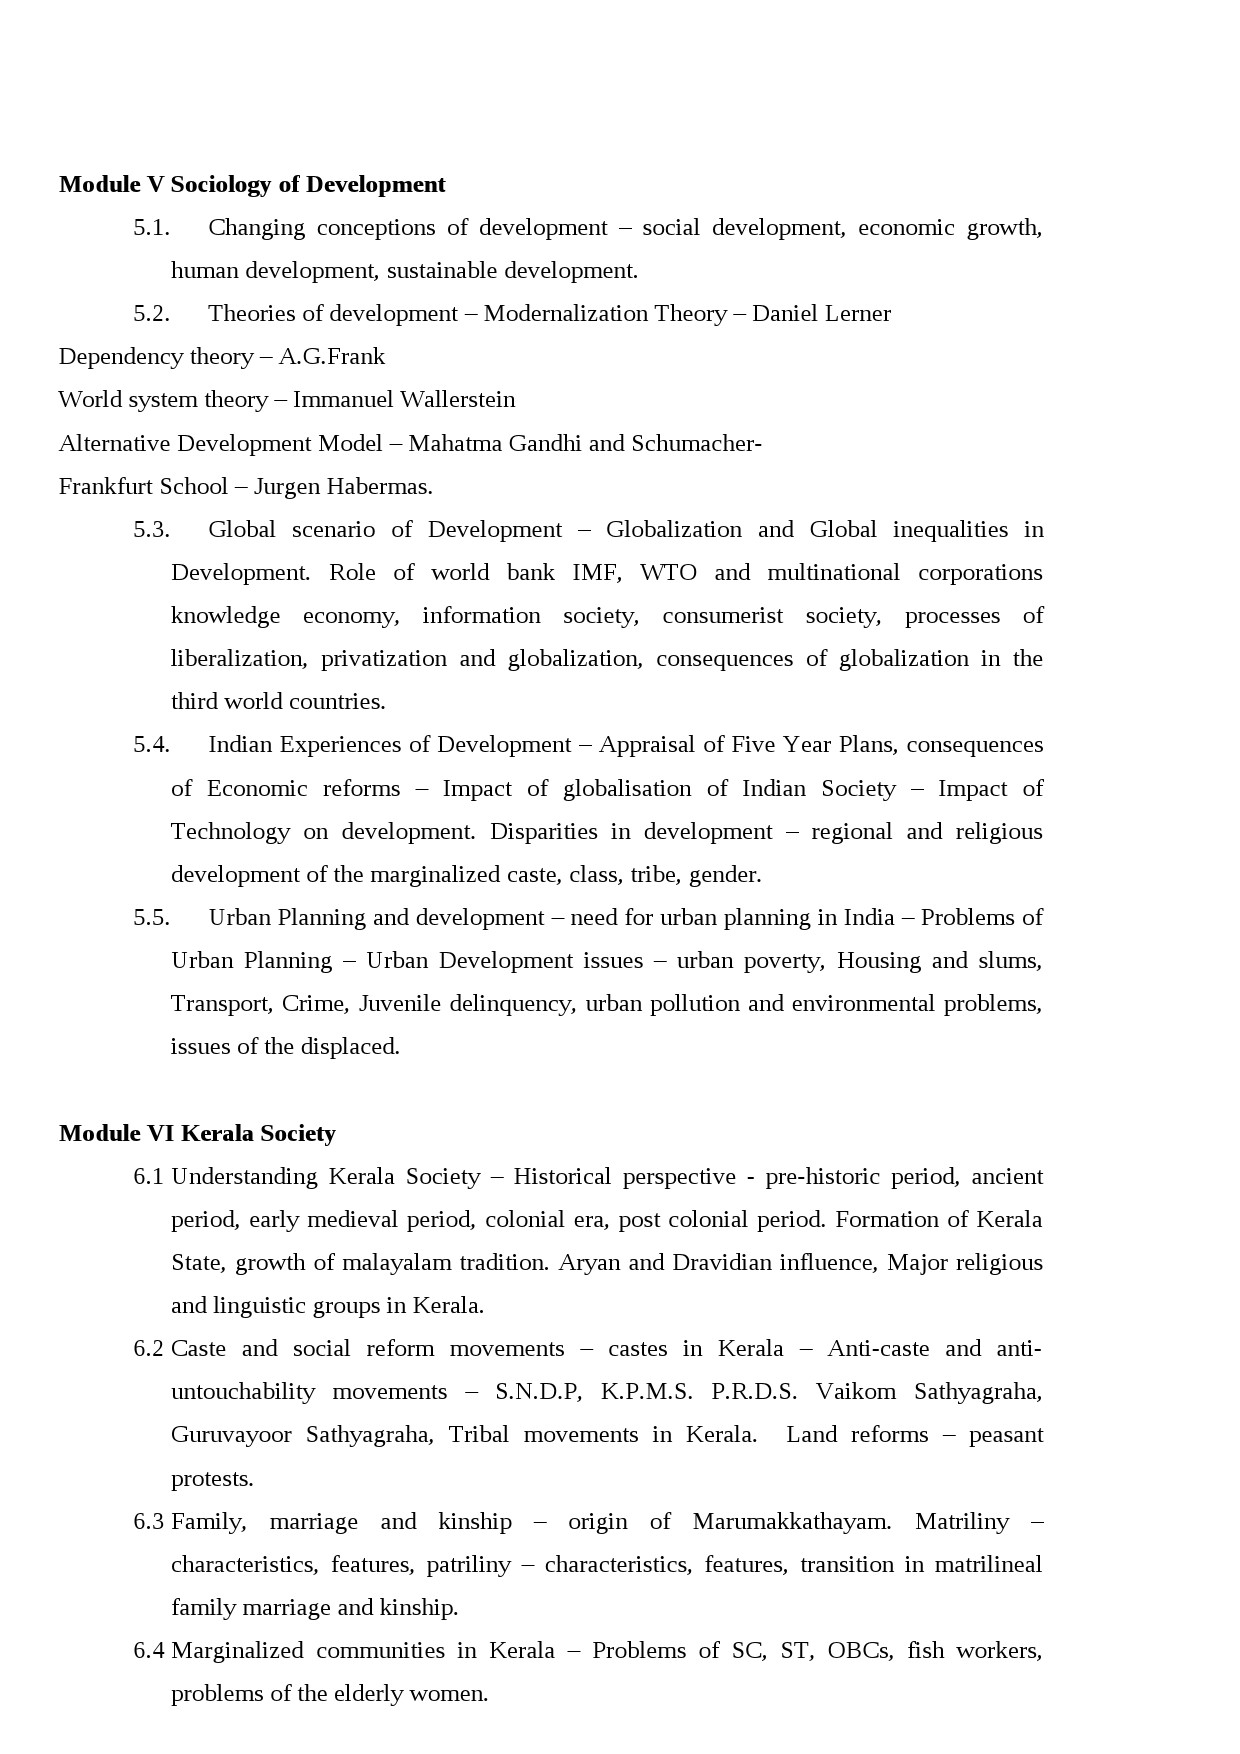 Humanities Syllabus for Kerala PSC 2021 Exam - Notification Image 43